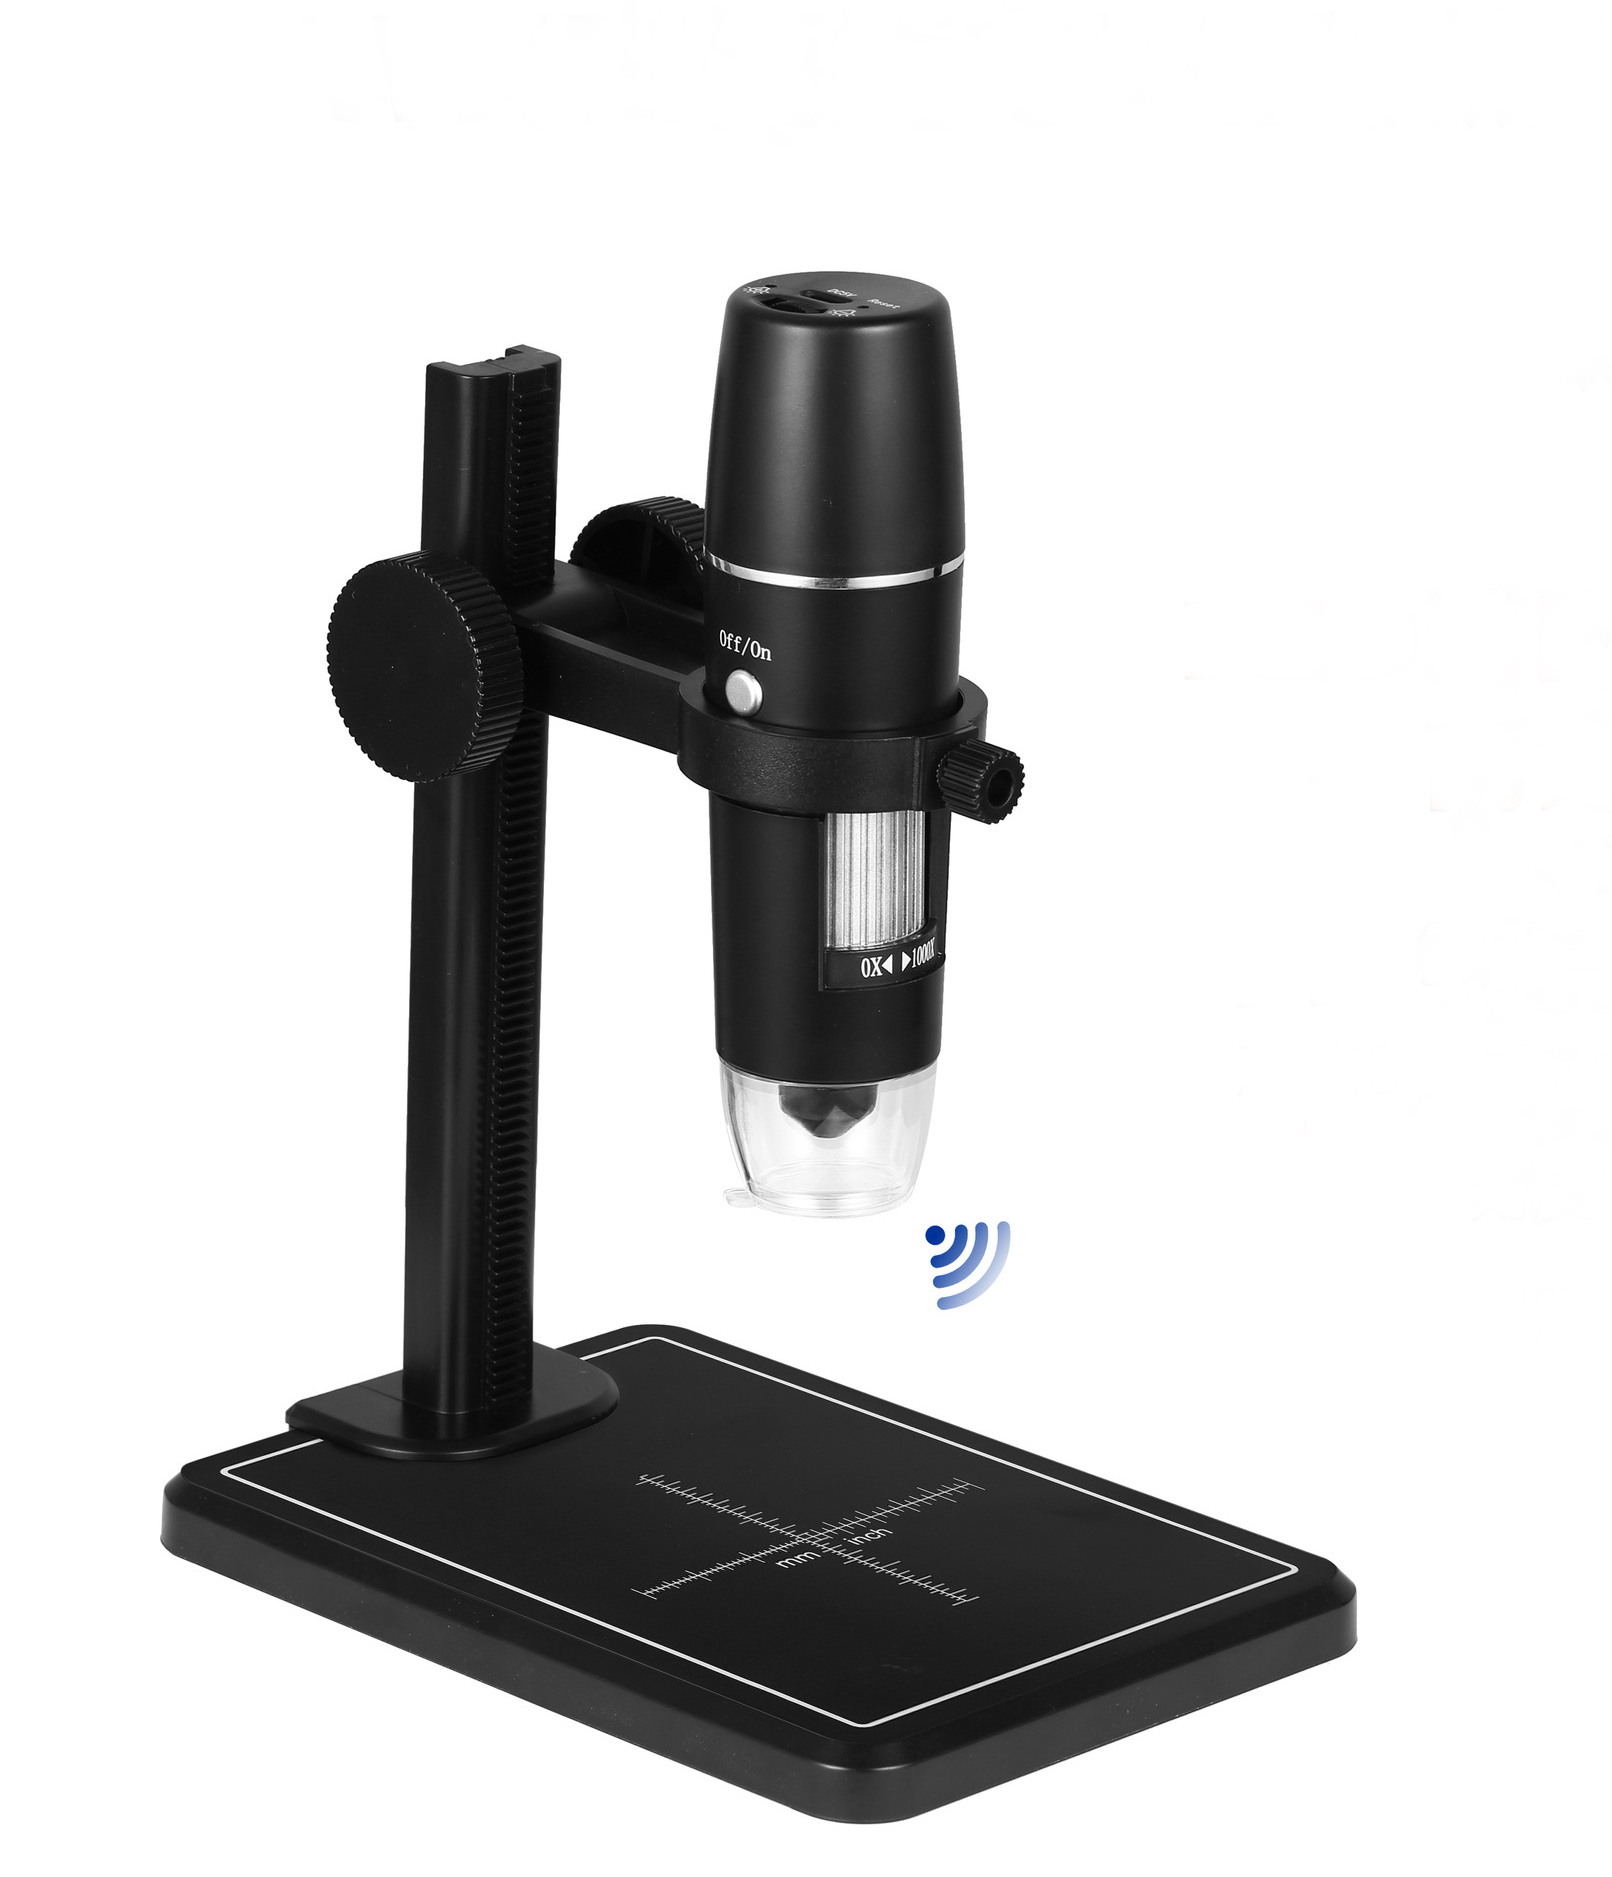 1000x wireless WIFI connection Portable digital Microscope